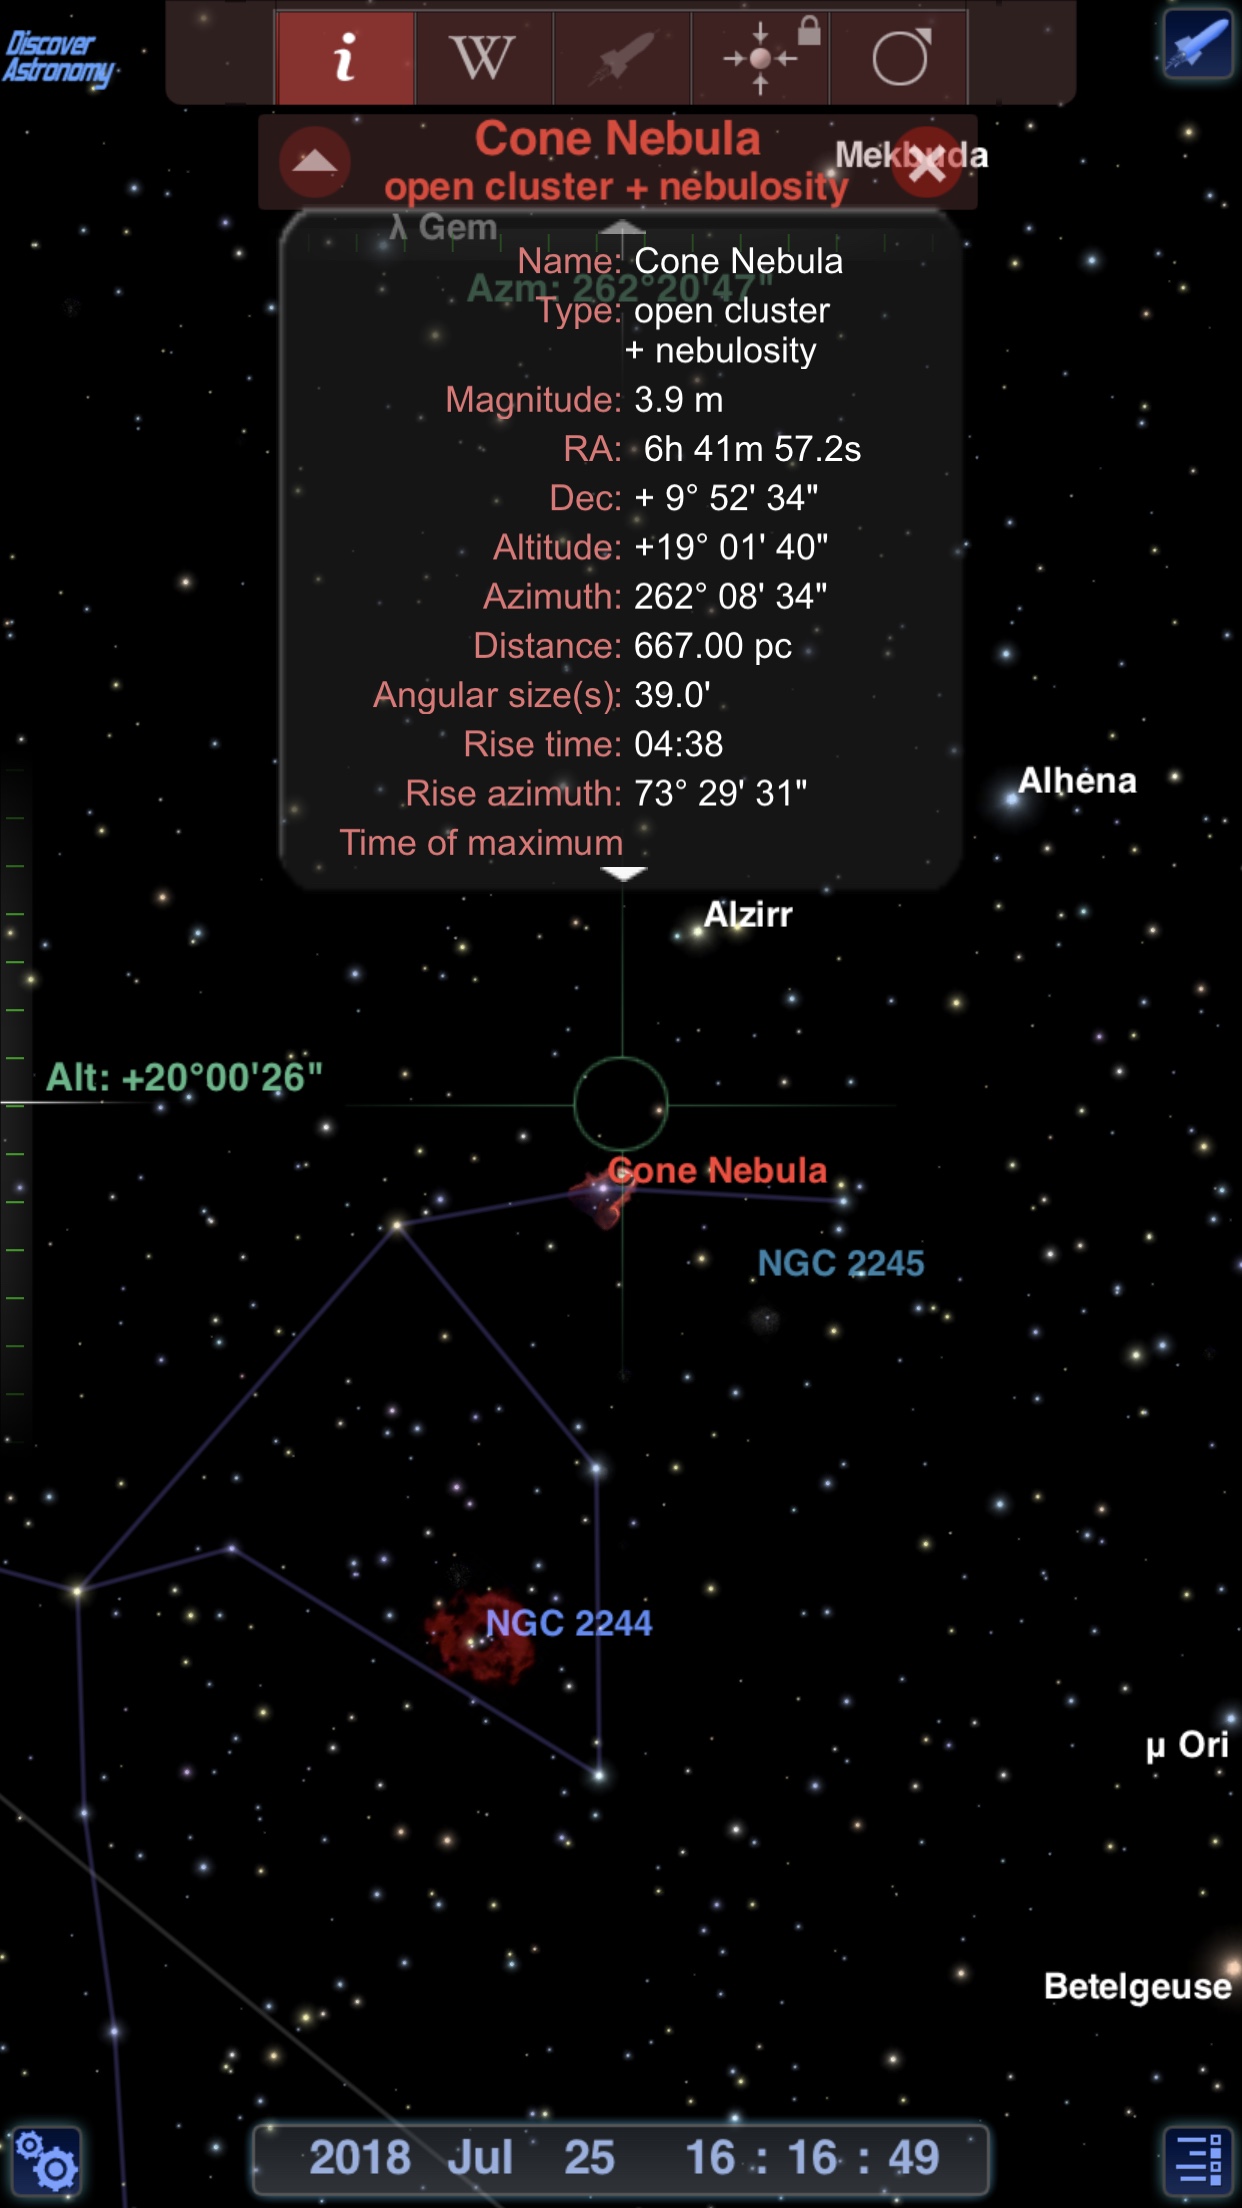 Cone nebula info in Redshift Pro Astronomy iOS app screenshot